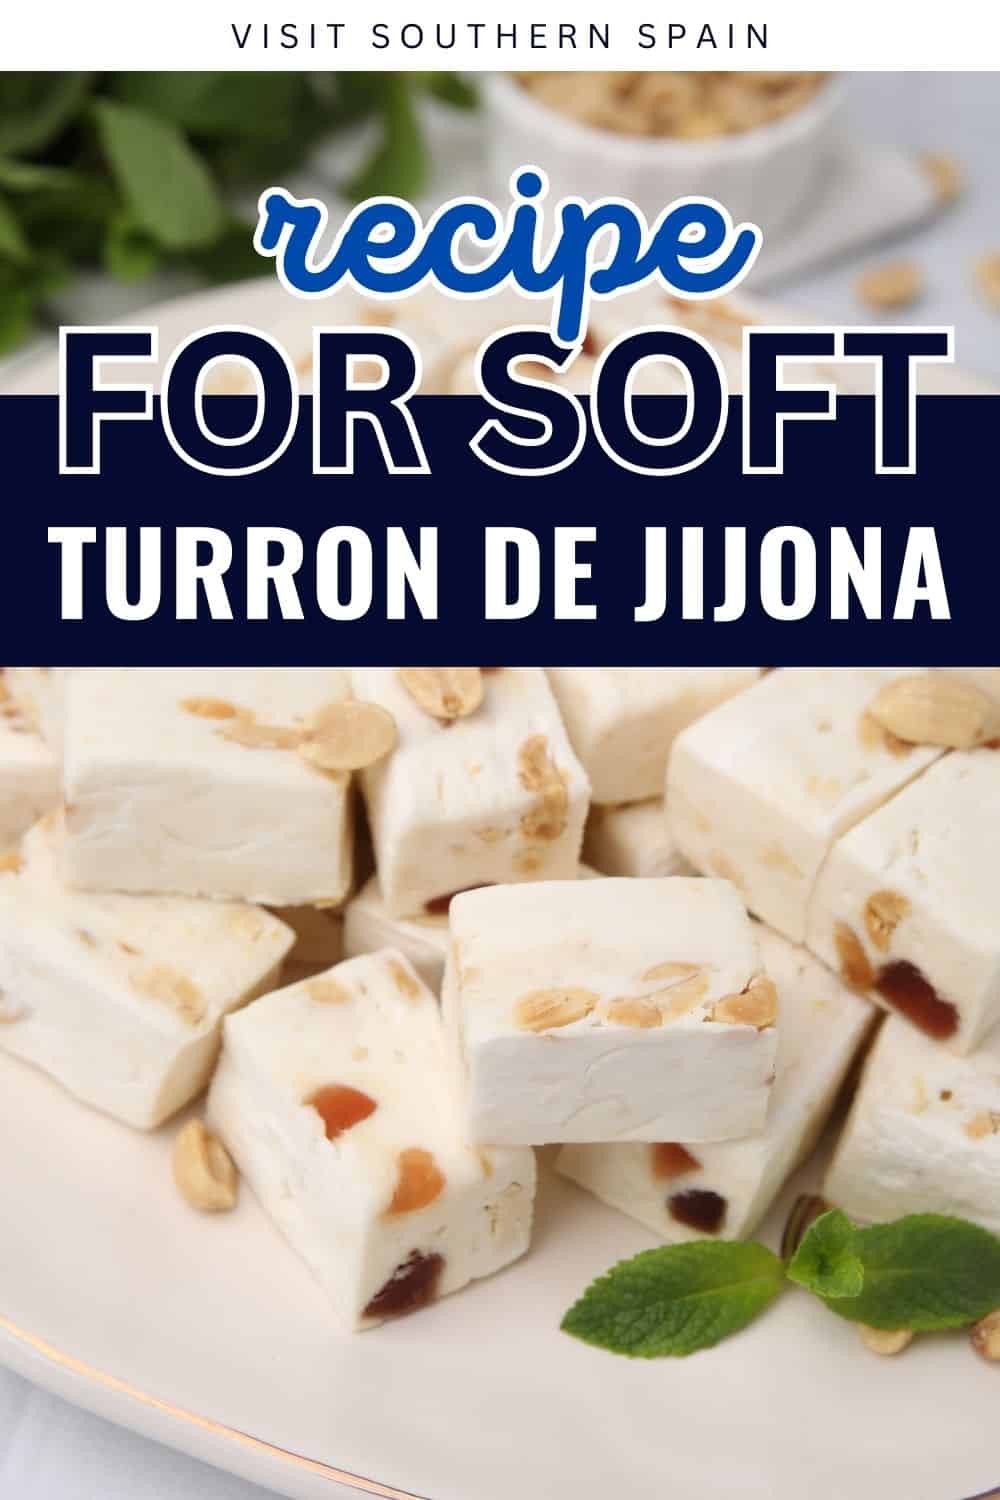 Turrón Jijona is a Soft nougat